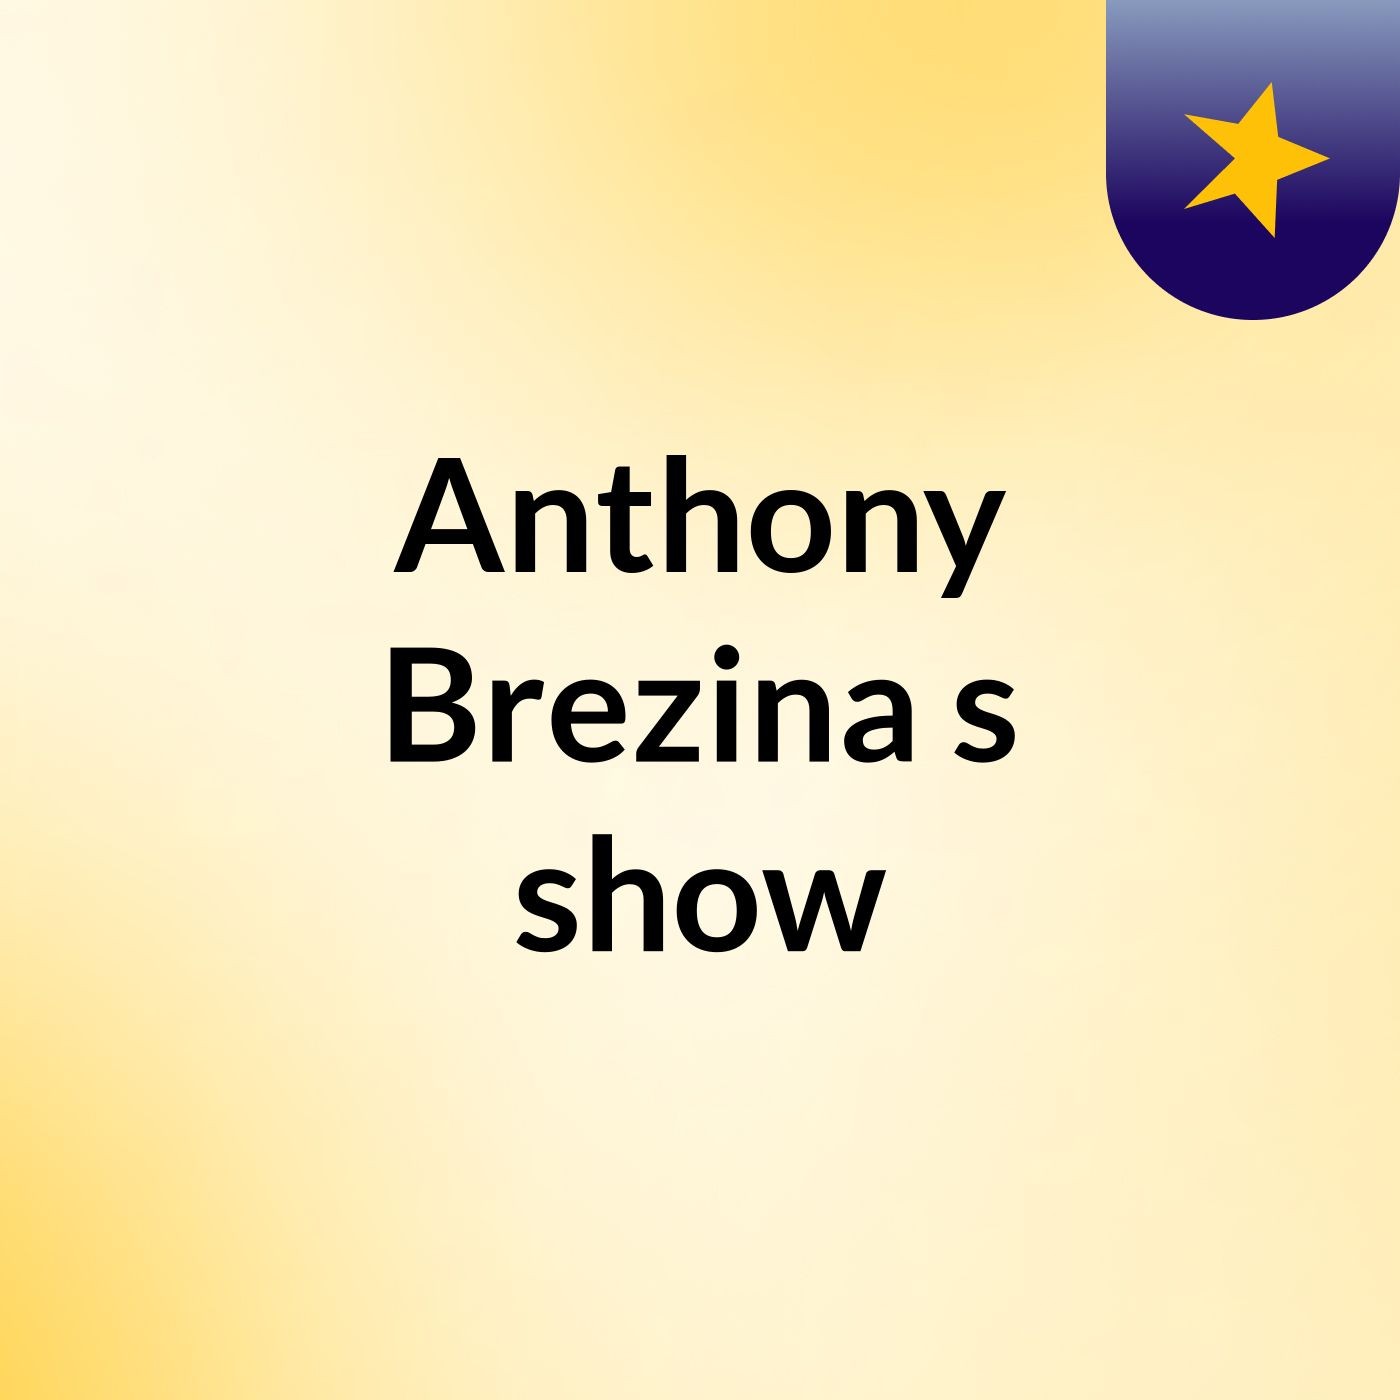 Anthony Brezina's show